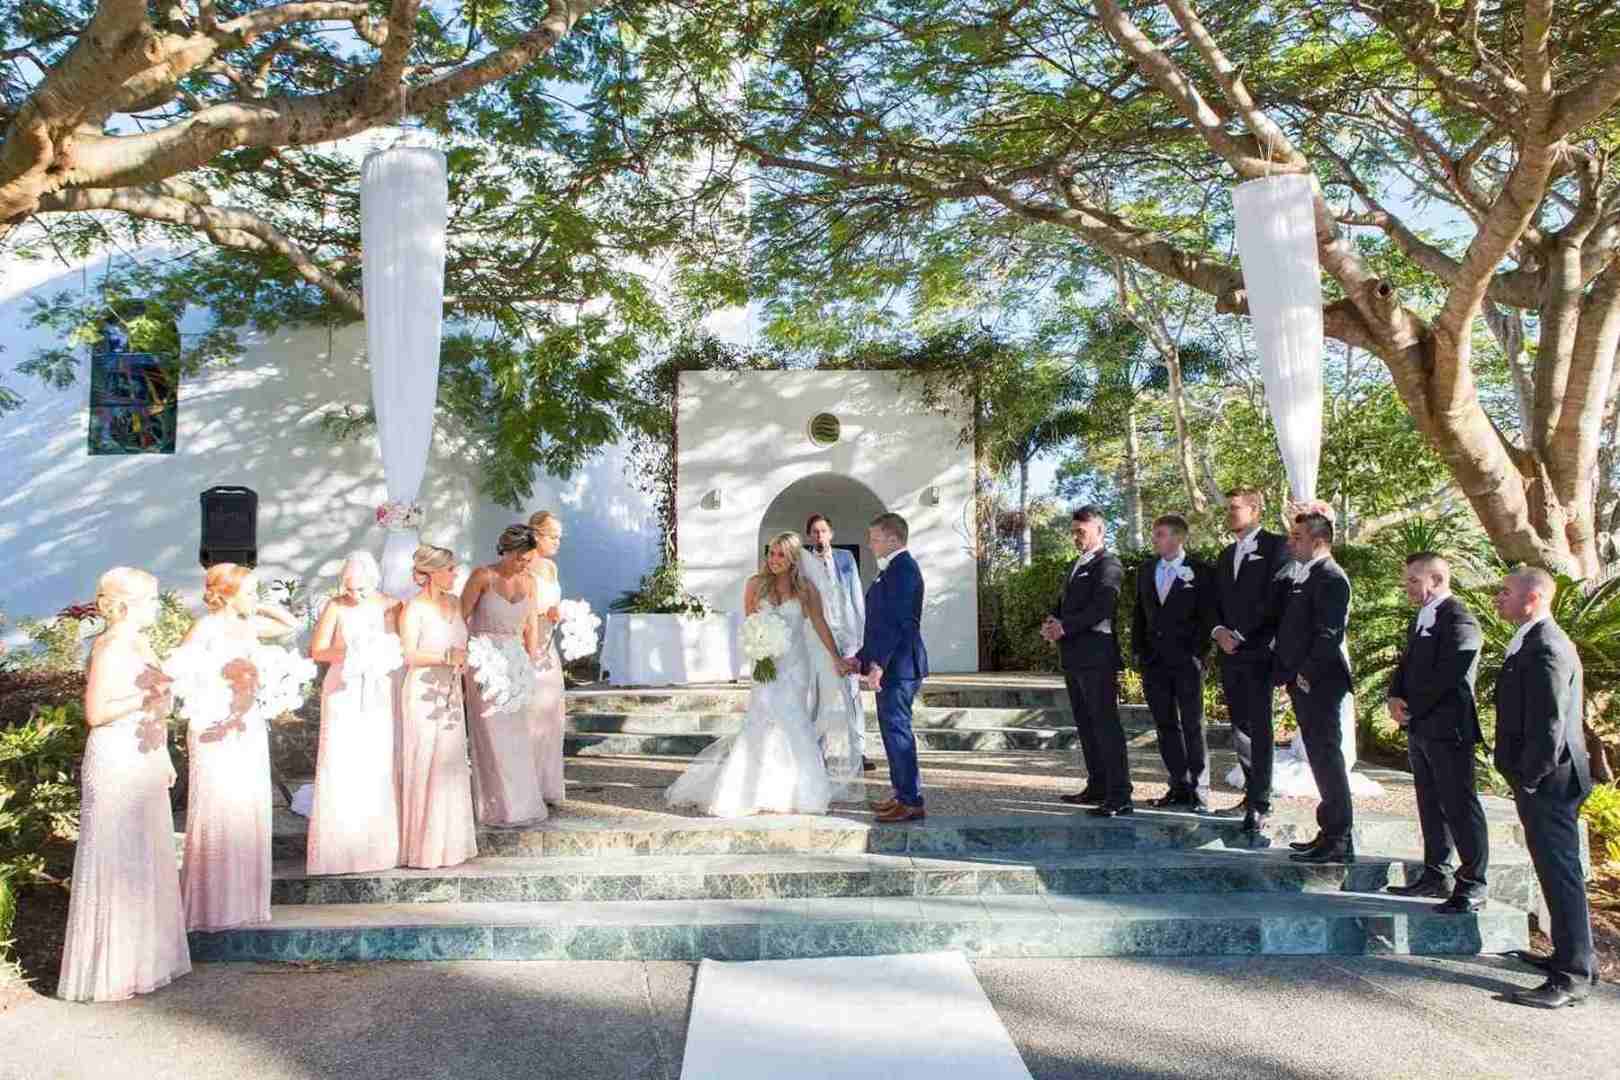 racv royal pines resort weddings | wedding venue | veilability